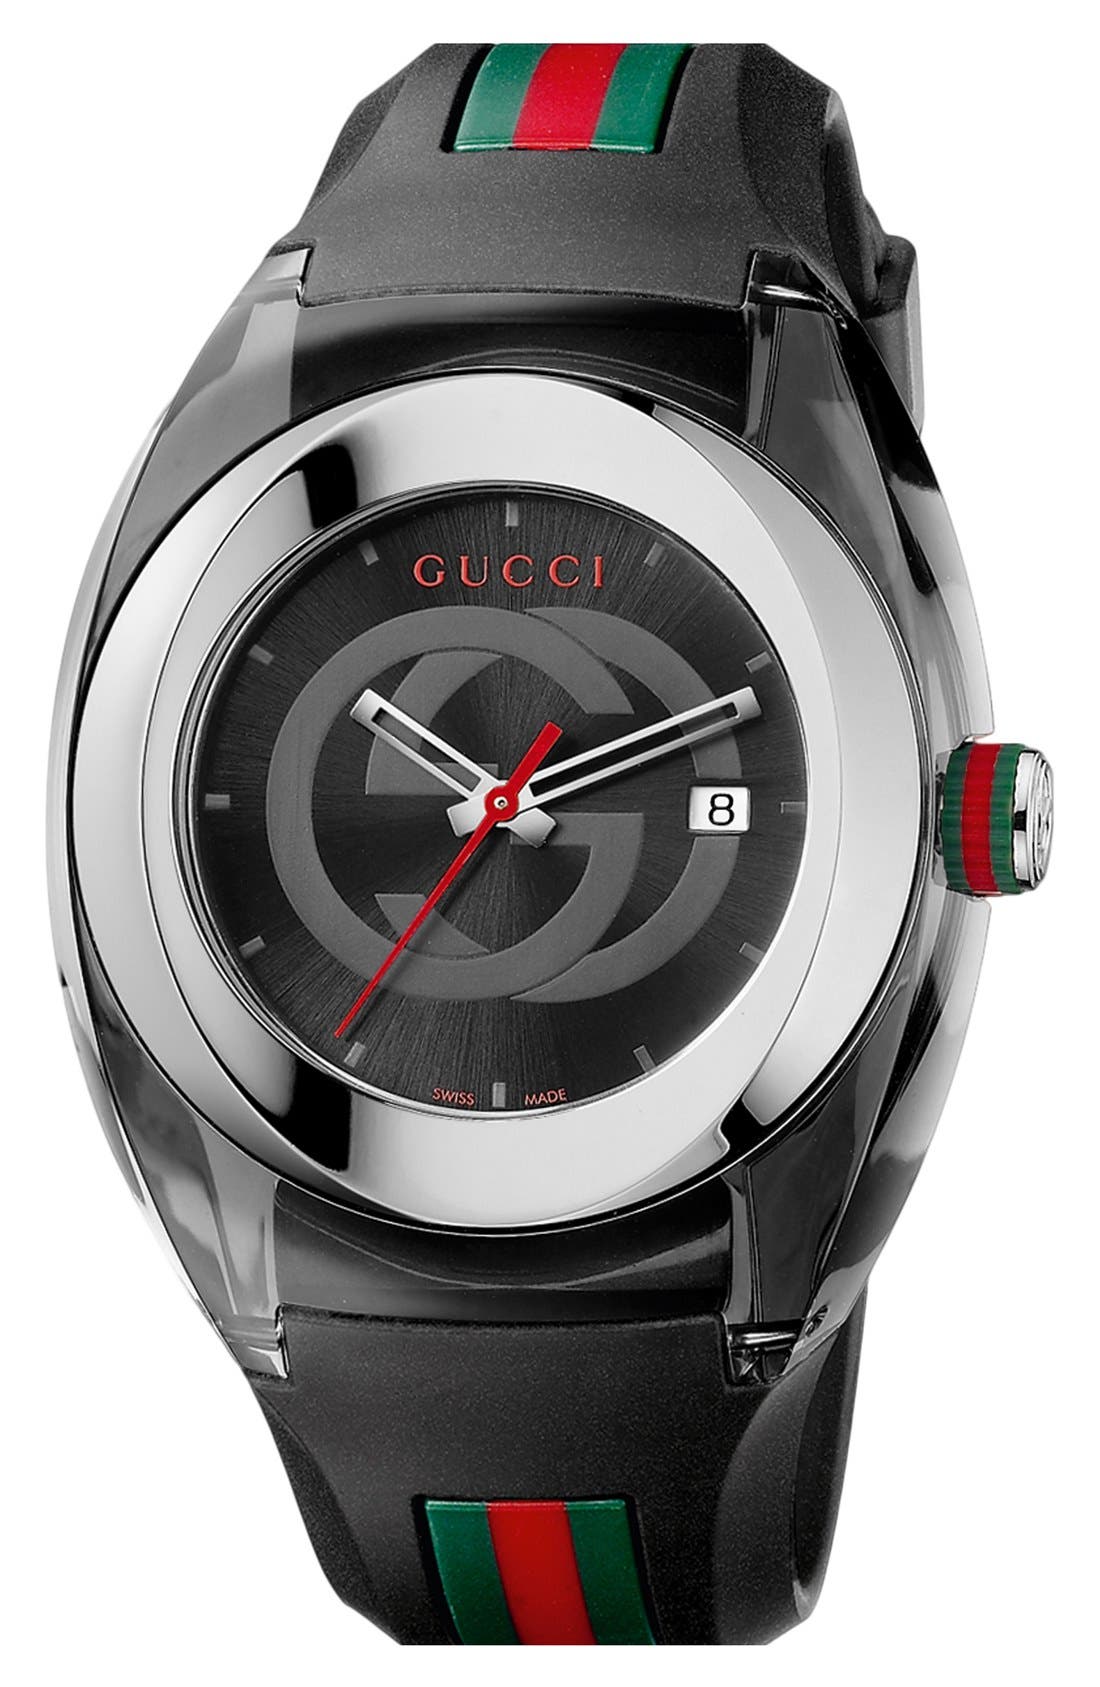 gucci xxl watch